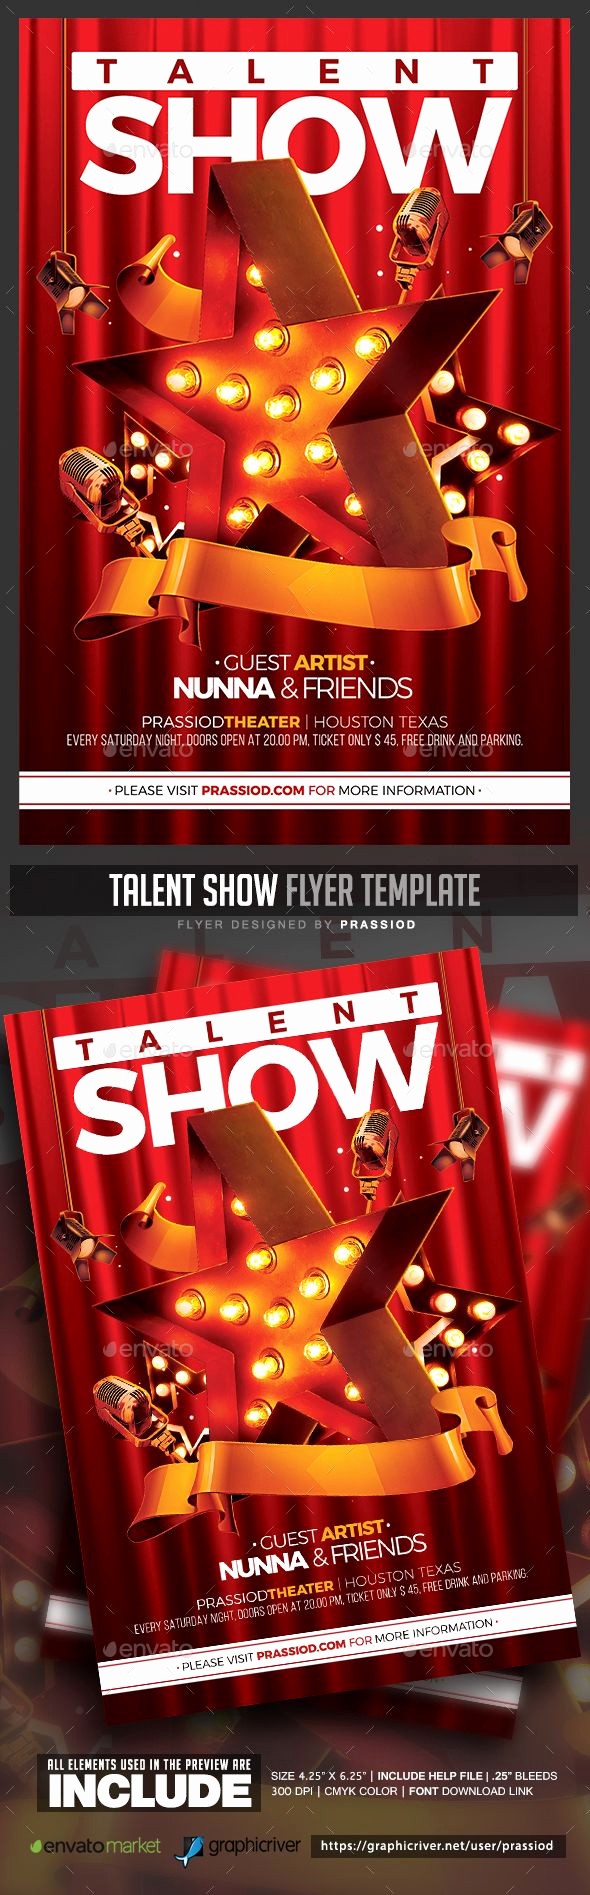 Free Talent Show Flyer Templates Fresh the 25 Best Talent Show Ideas On Pinterest